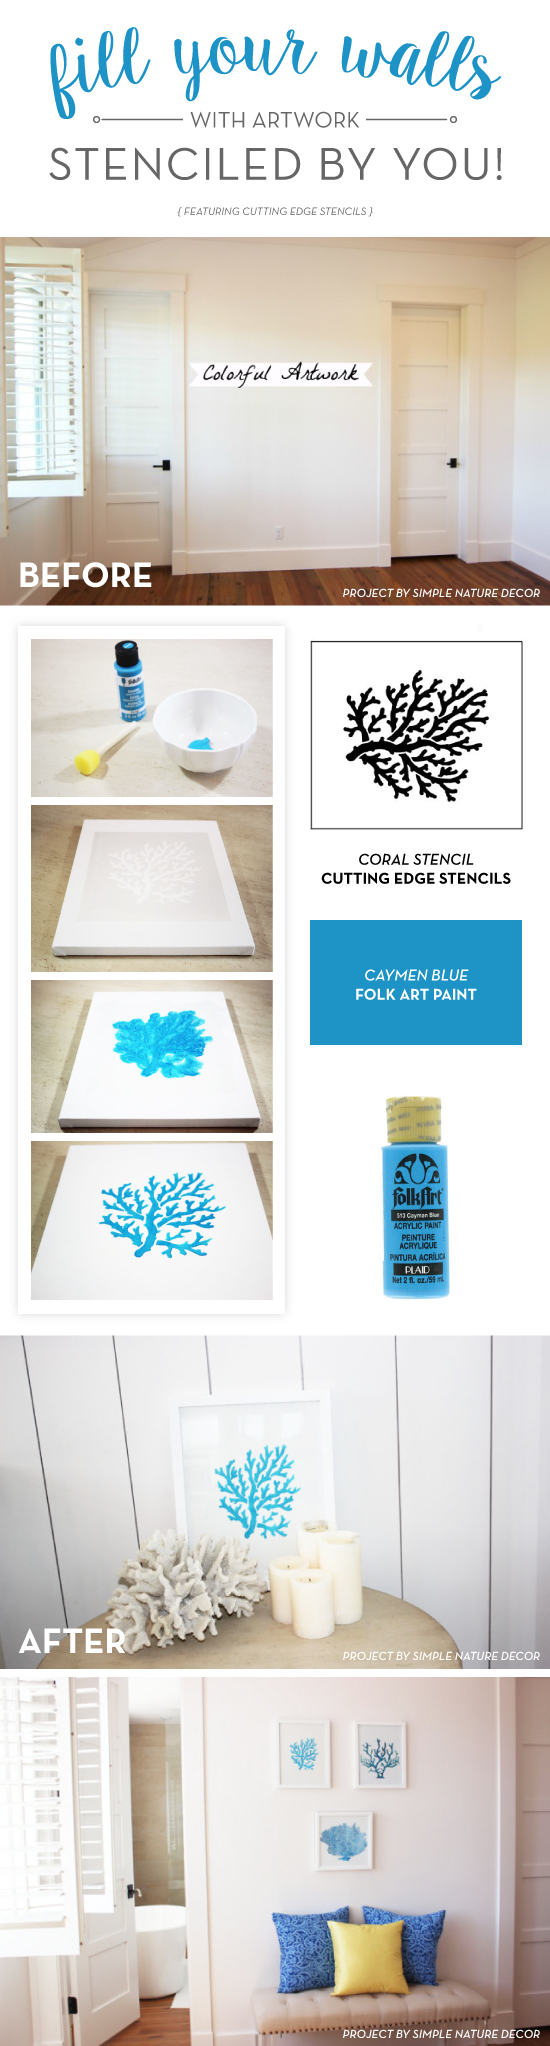 Cutting Edge Stencils shares how to stencil DIY artwork for your blank walls using craft stencils. http://www.cuttingedgestencils.com/beach-style-decor-coral-stencil.html